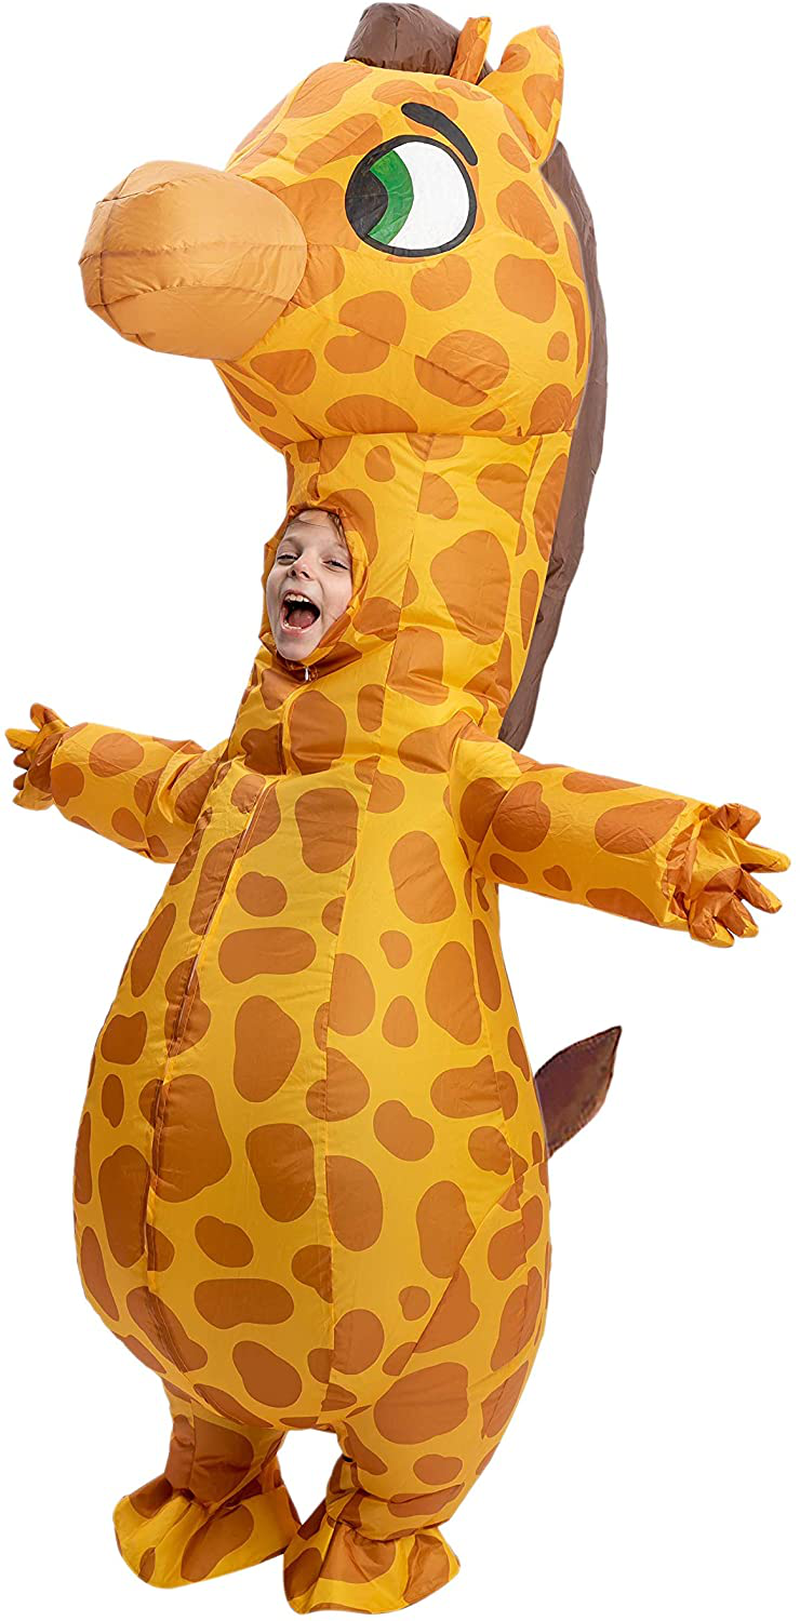 Spooktacular Creations Child Unisex Giraffe Full Body Inflatable Costume - Medium Child (7-10) Apparel & Accessories > Costumes & Accessories > Costumes Spooktacular Creations Child (7-10)  